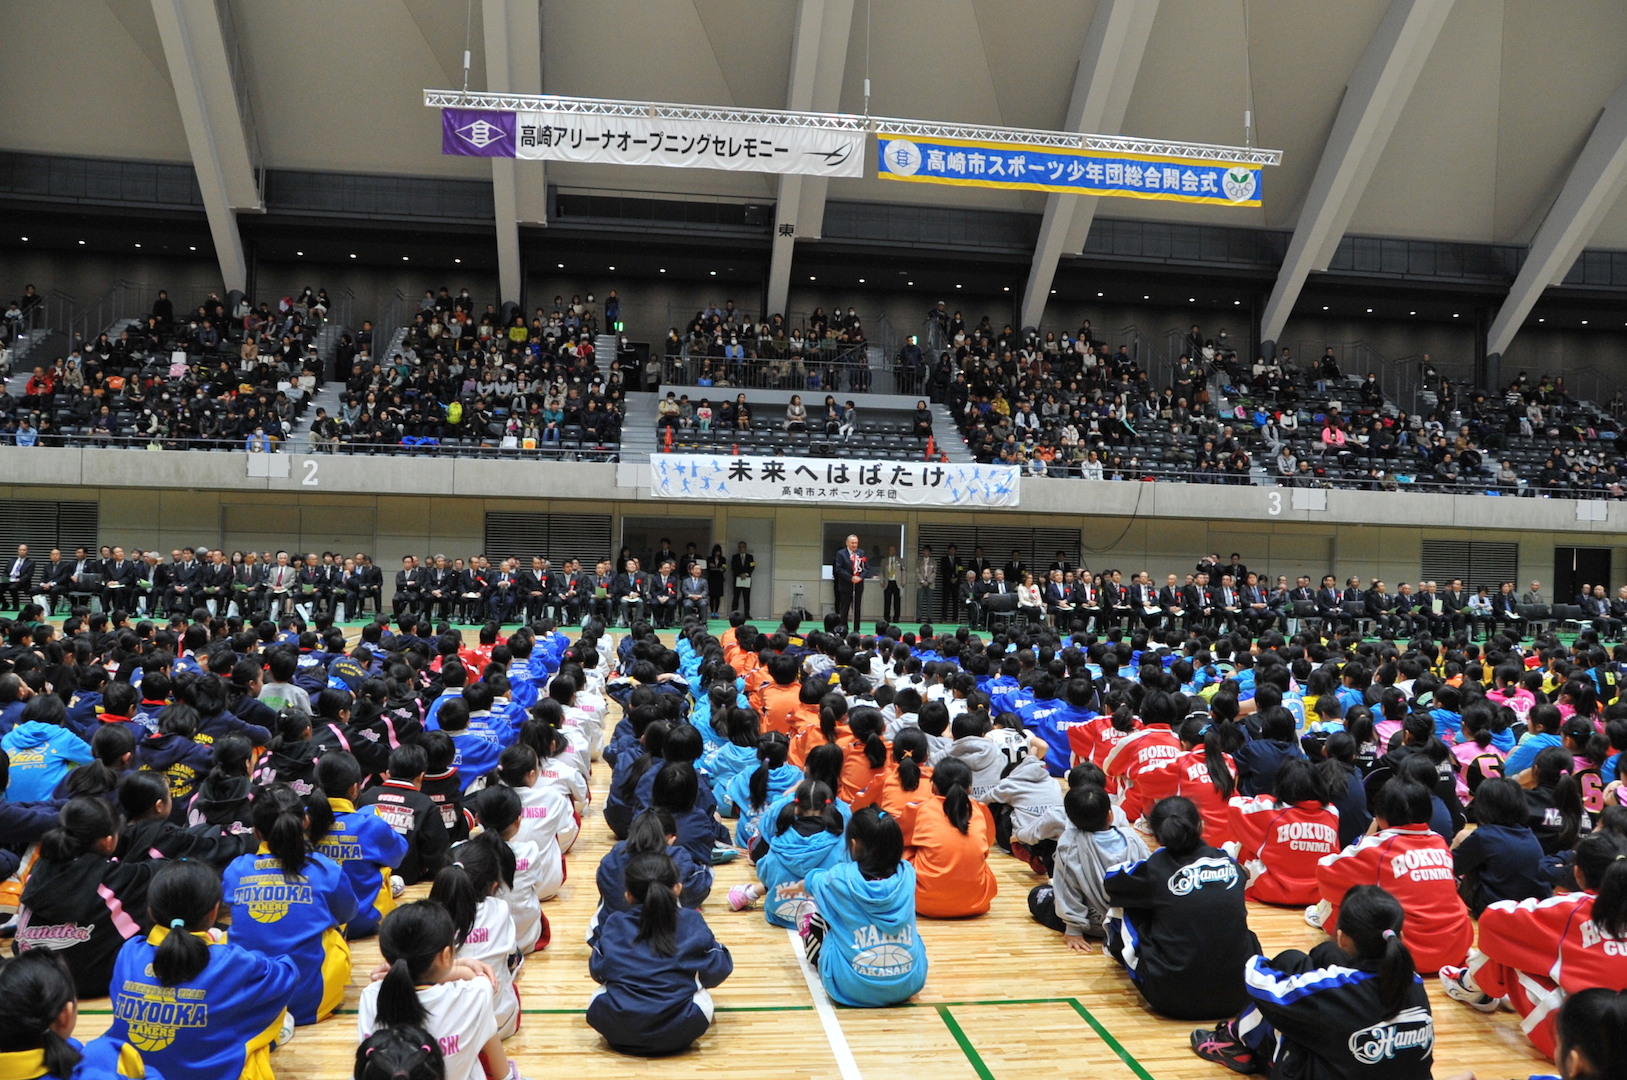 Takasaki Arena Opening Ceremony<br />Takasaki Junior Sports Club Opening Ceremony 4